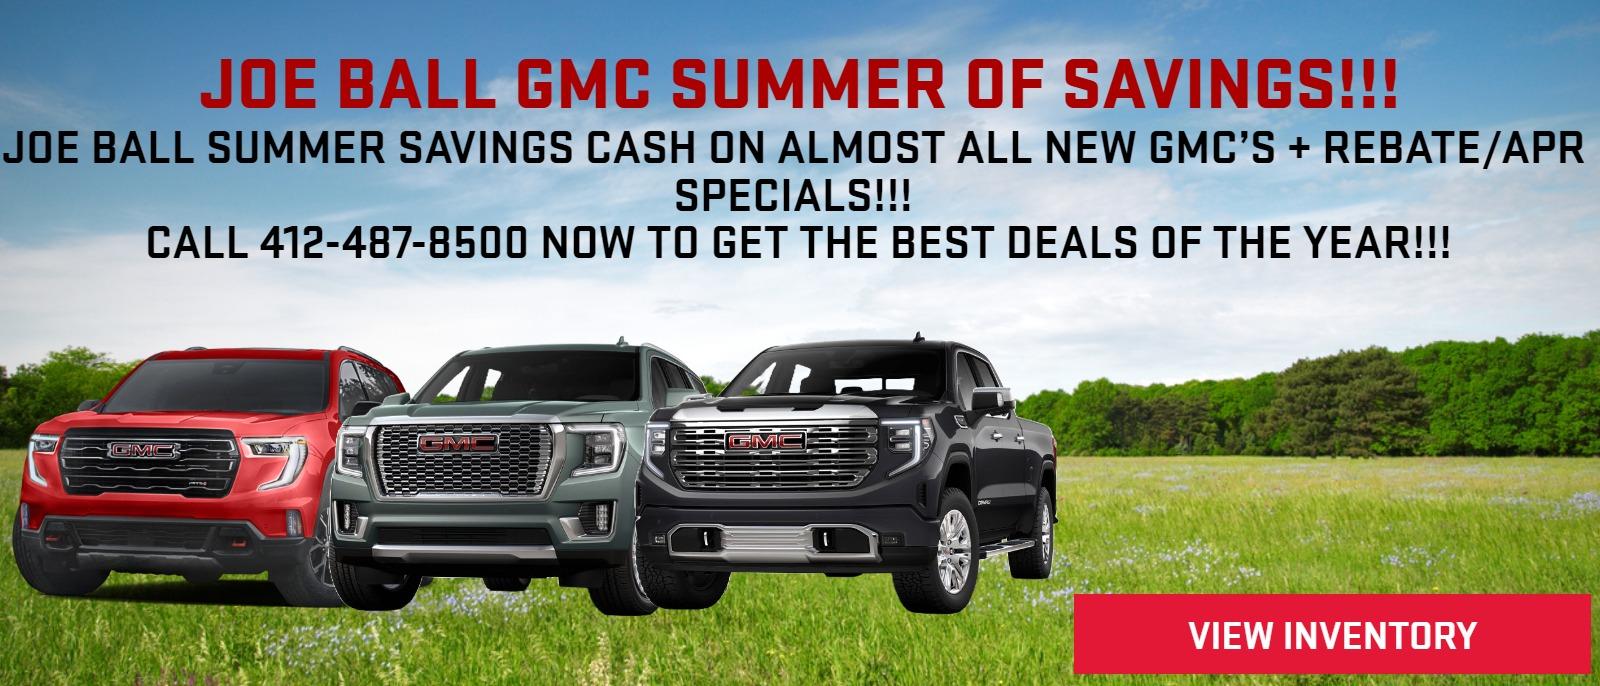 Joe Ball Summer Savings Cash on almost all new GMC’s + Rebate/APR Specials!!!